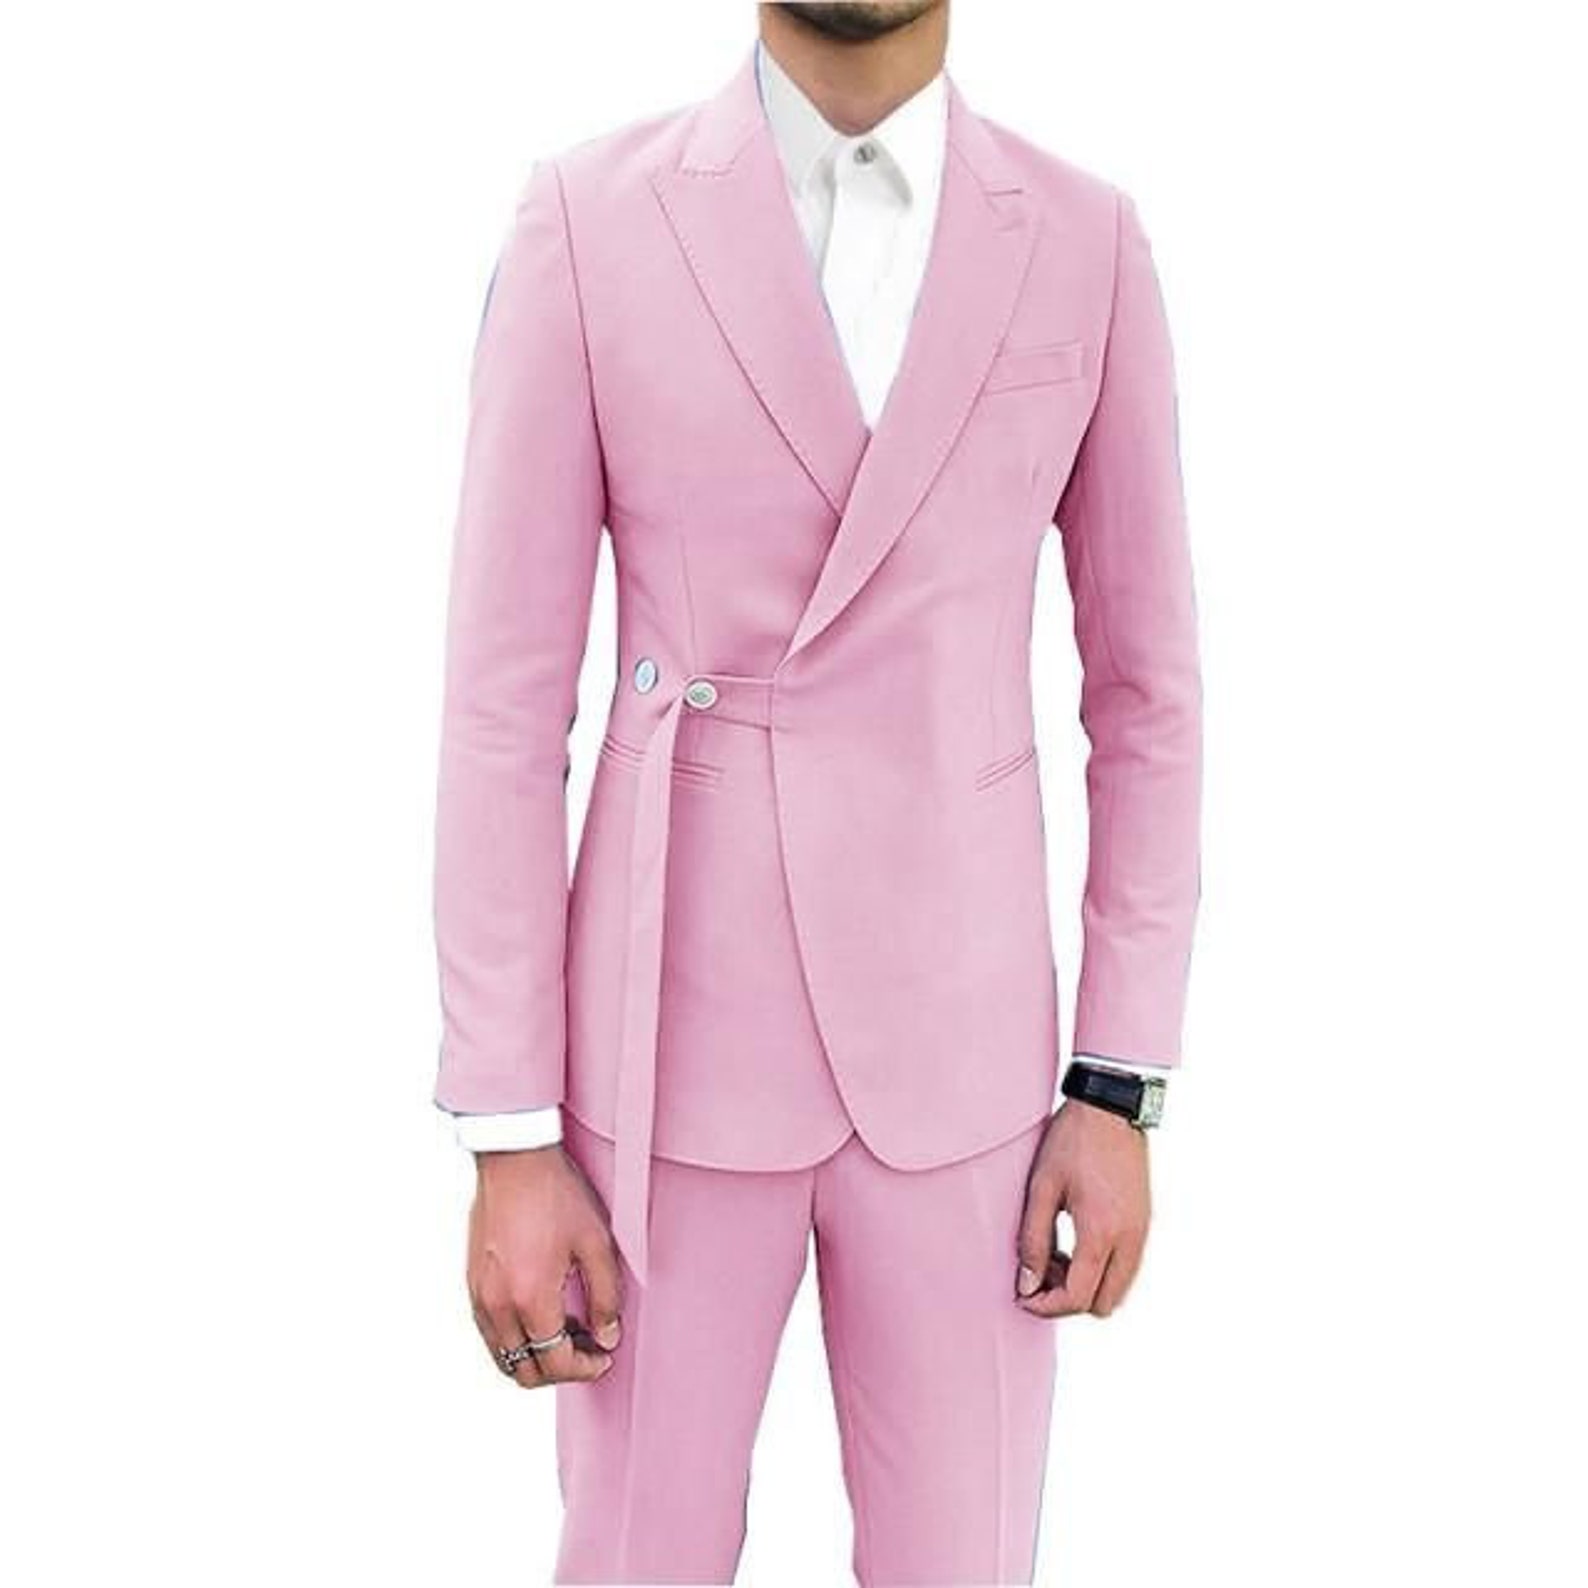 Buckle Suit for Men Suit and Blazers for Men Men's Suits - Etsy